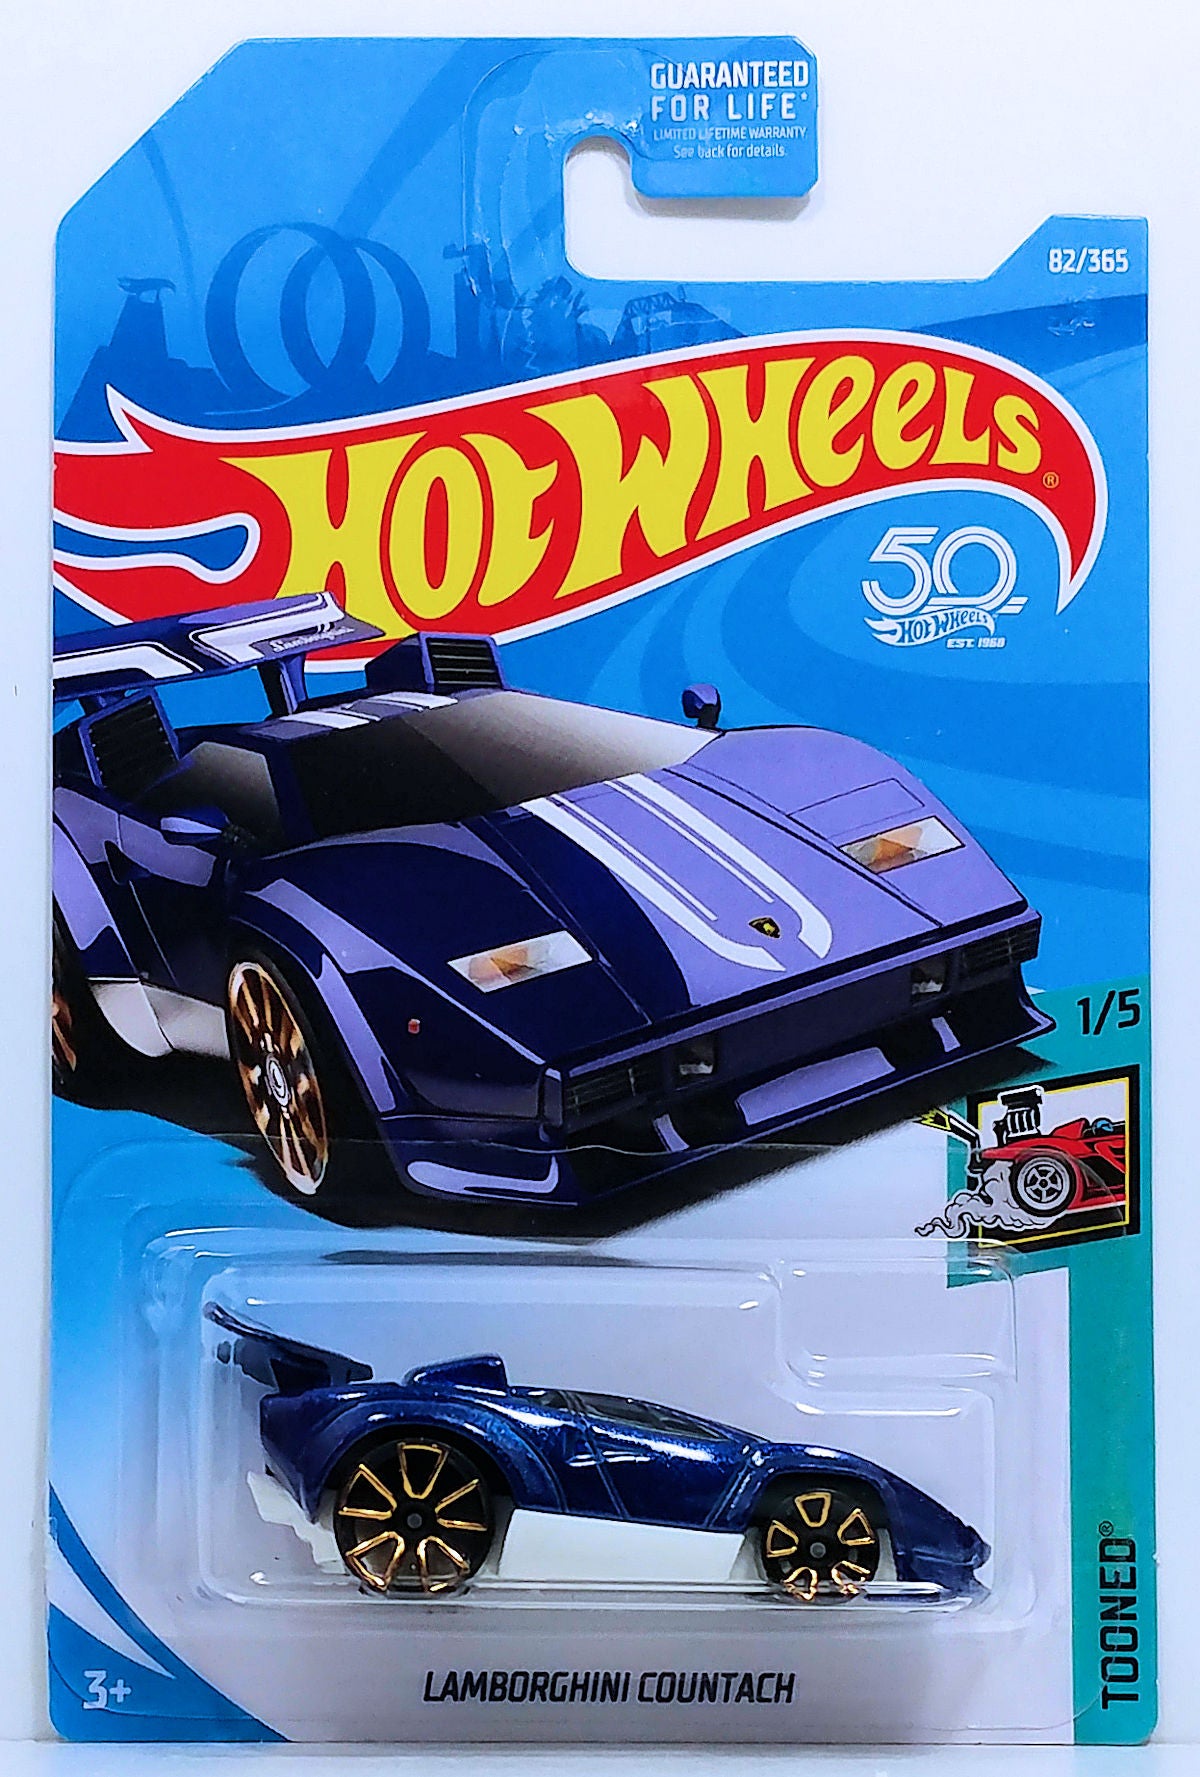 Hot Wheels 2018 - Collector # 082/365 - Tooned 1/5 - Lamborghini Countach - Metallic Dark Blue - USA 50th Card